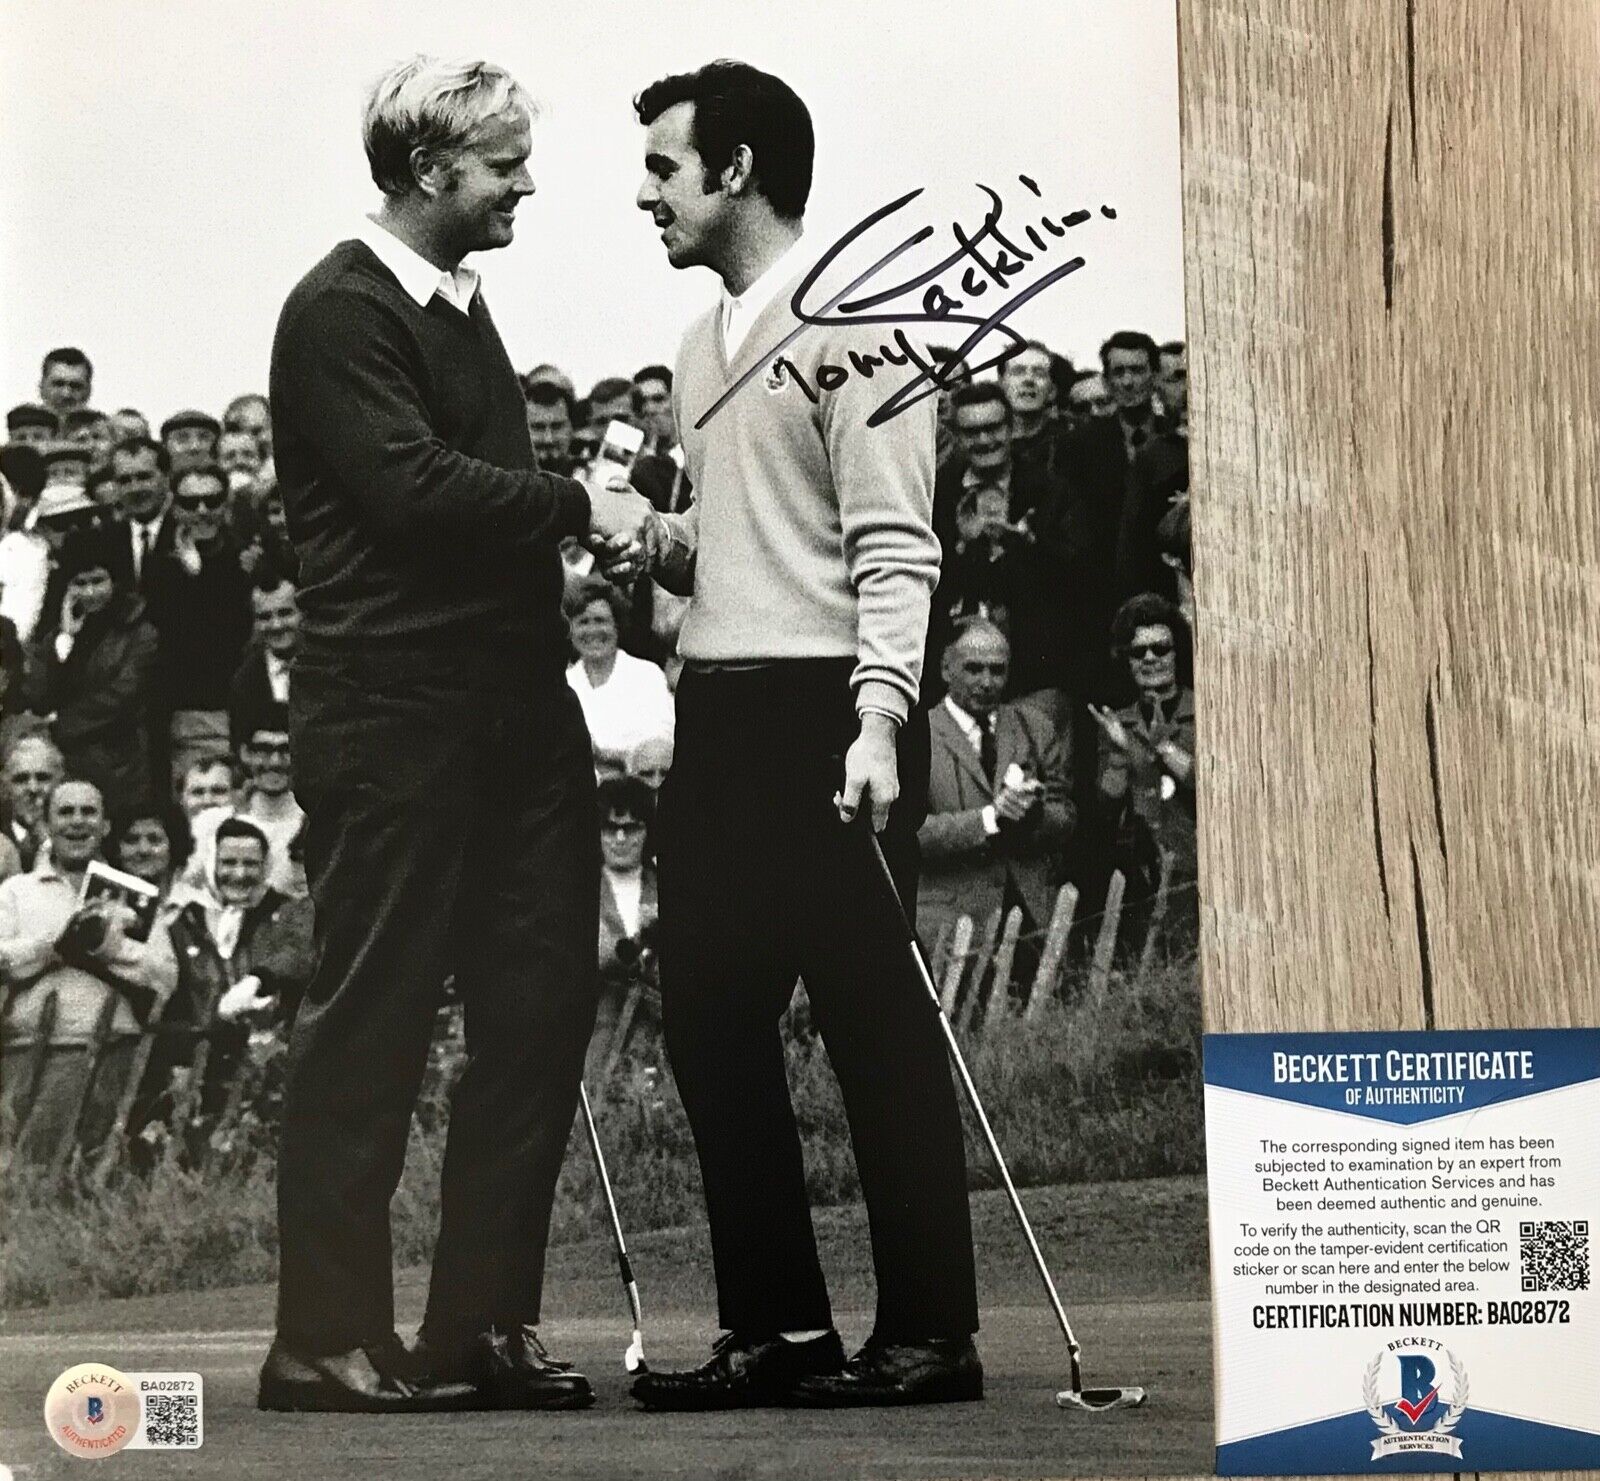 Tony Jacklin US OPEN Autographed Signed PGA Golf 8x10 Photo Poster painting Beckett BAS